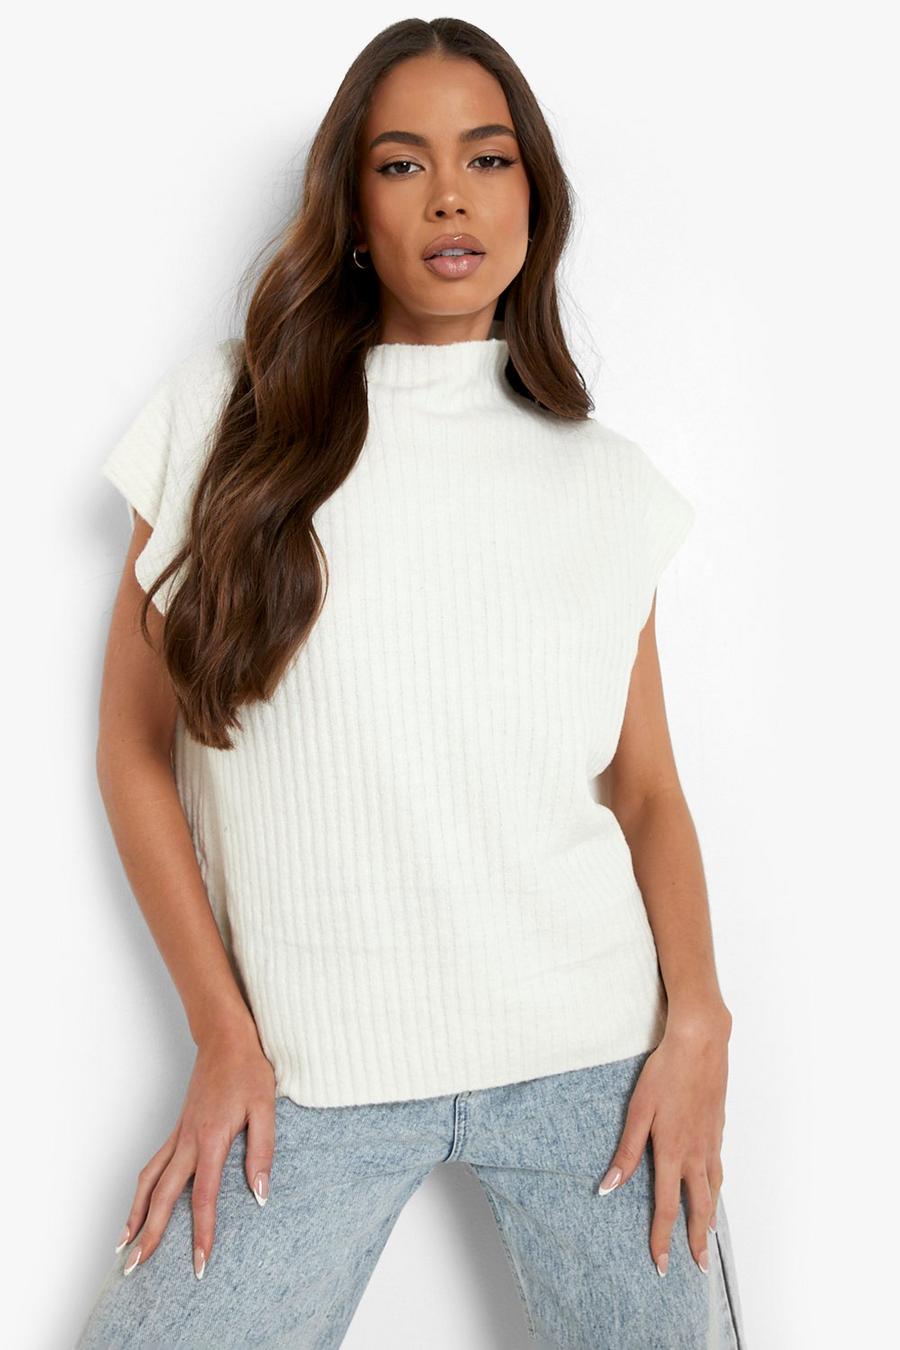 Cream white Sweater Vest